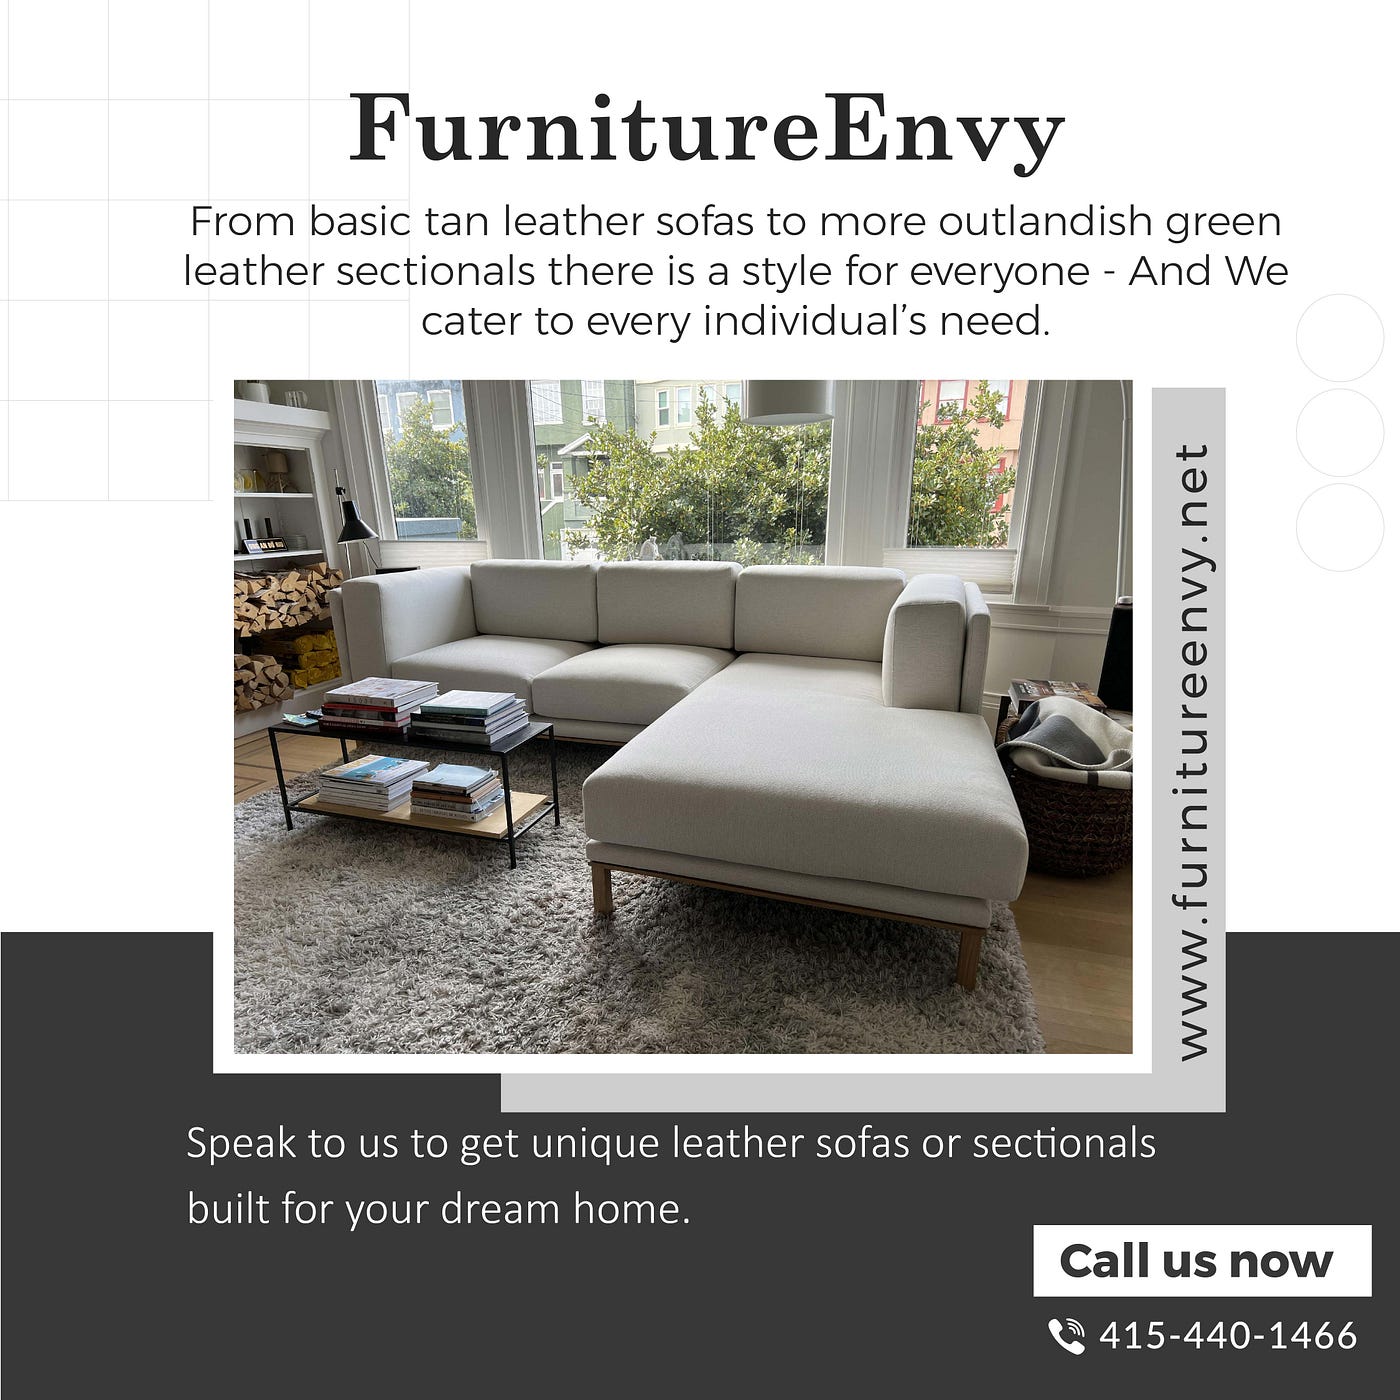 Custom Made Sofas in San Francisco, CA - Furnitureenvy - Medium